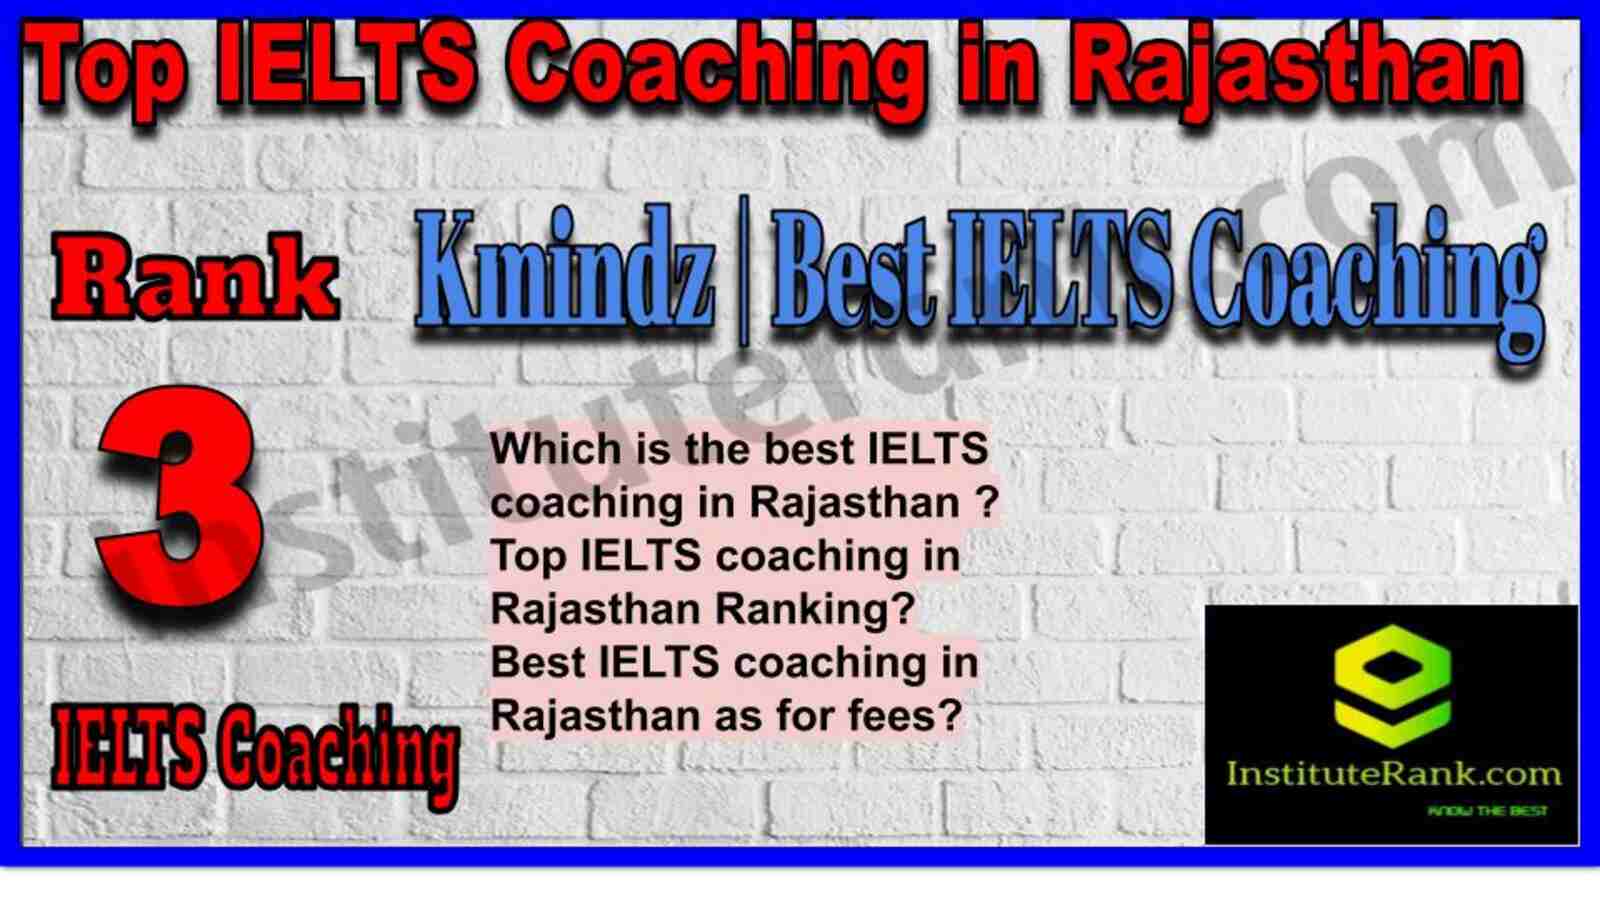 Rank 3. Kmindz | Best IELTS Coaching in Rajasthan